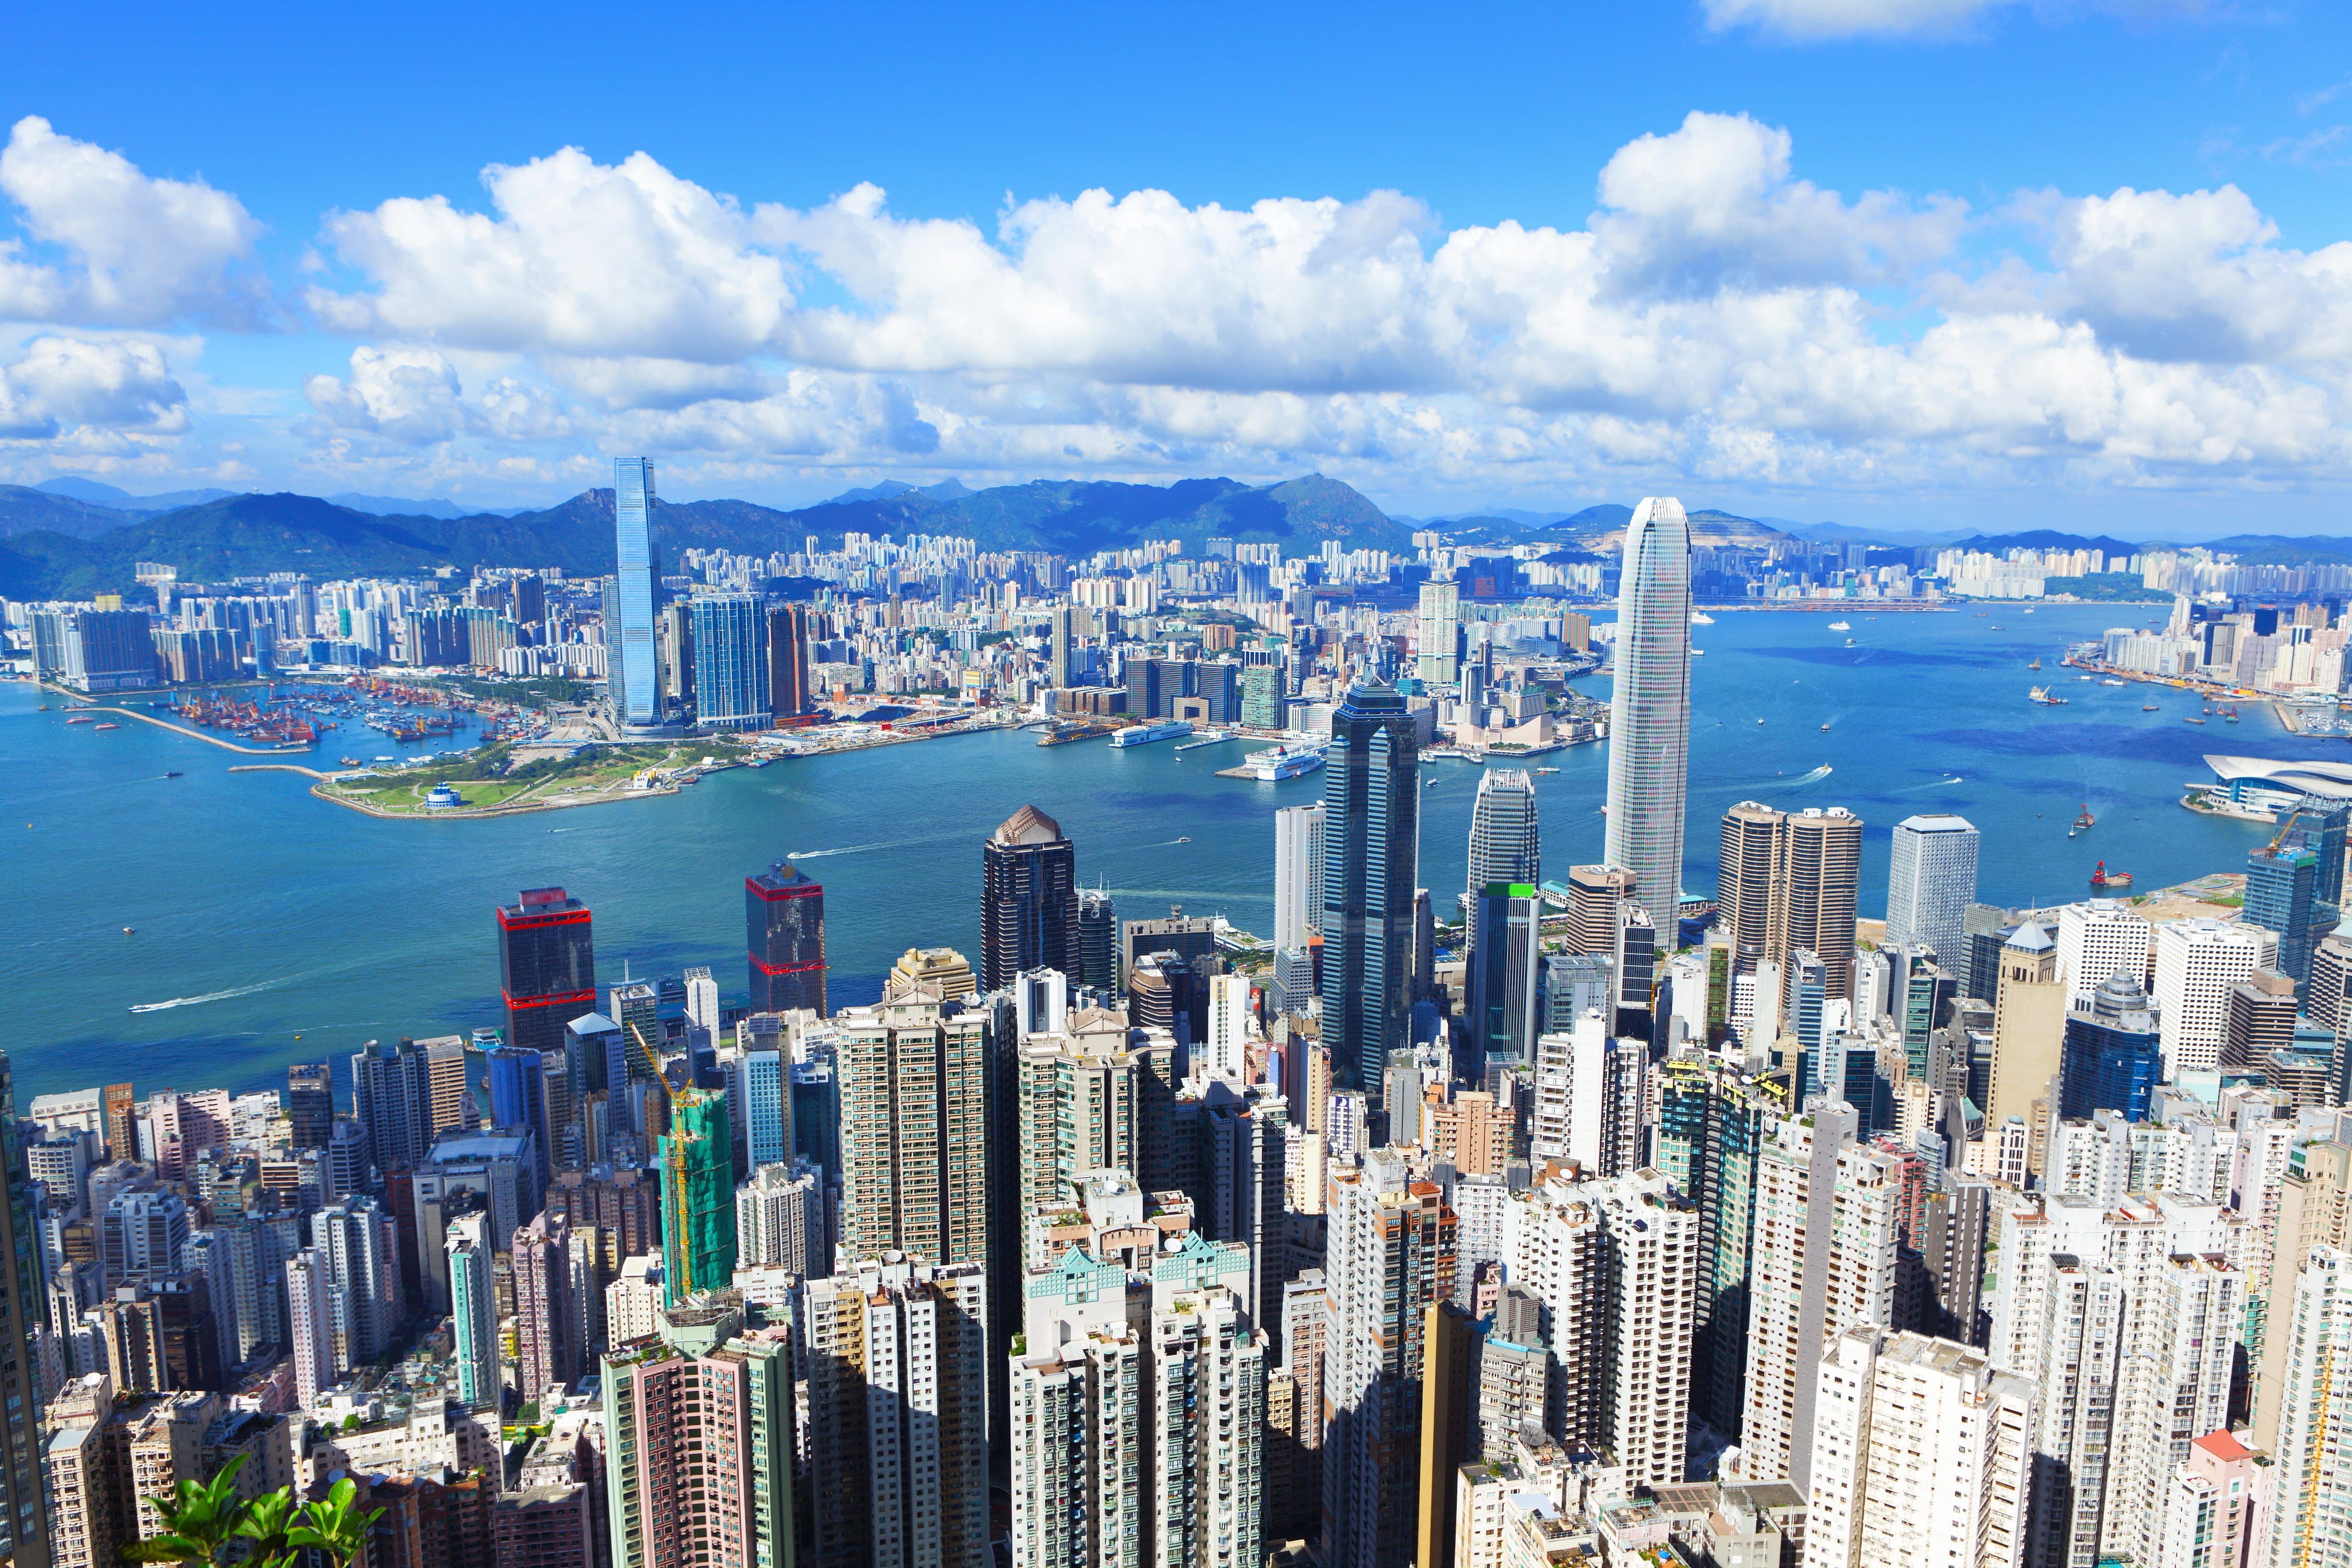 Bay Area 2.0: Hong Kong and China's New Innovation Economy